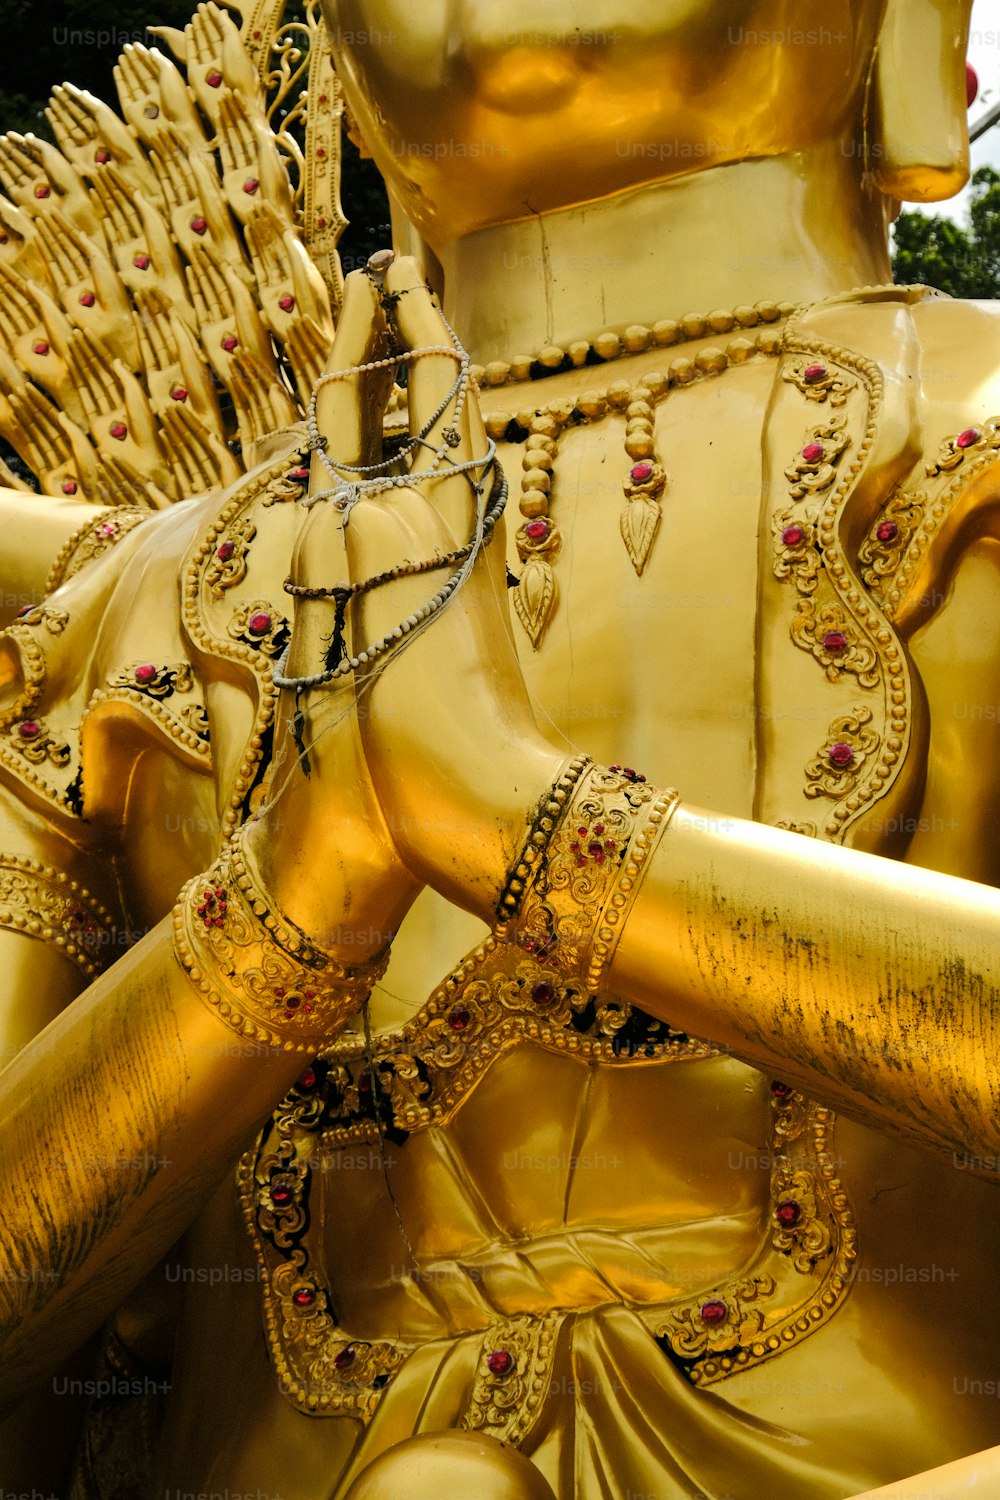 Una estatua dorada de una persona sosteniendo una espada